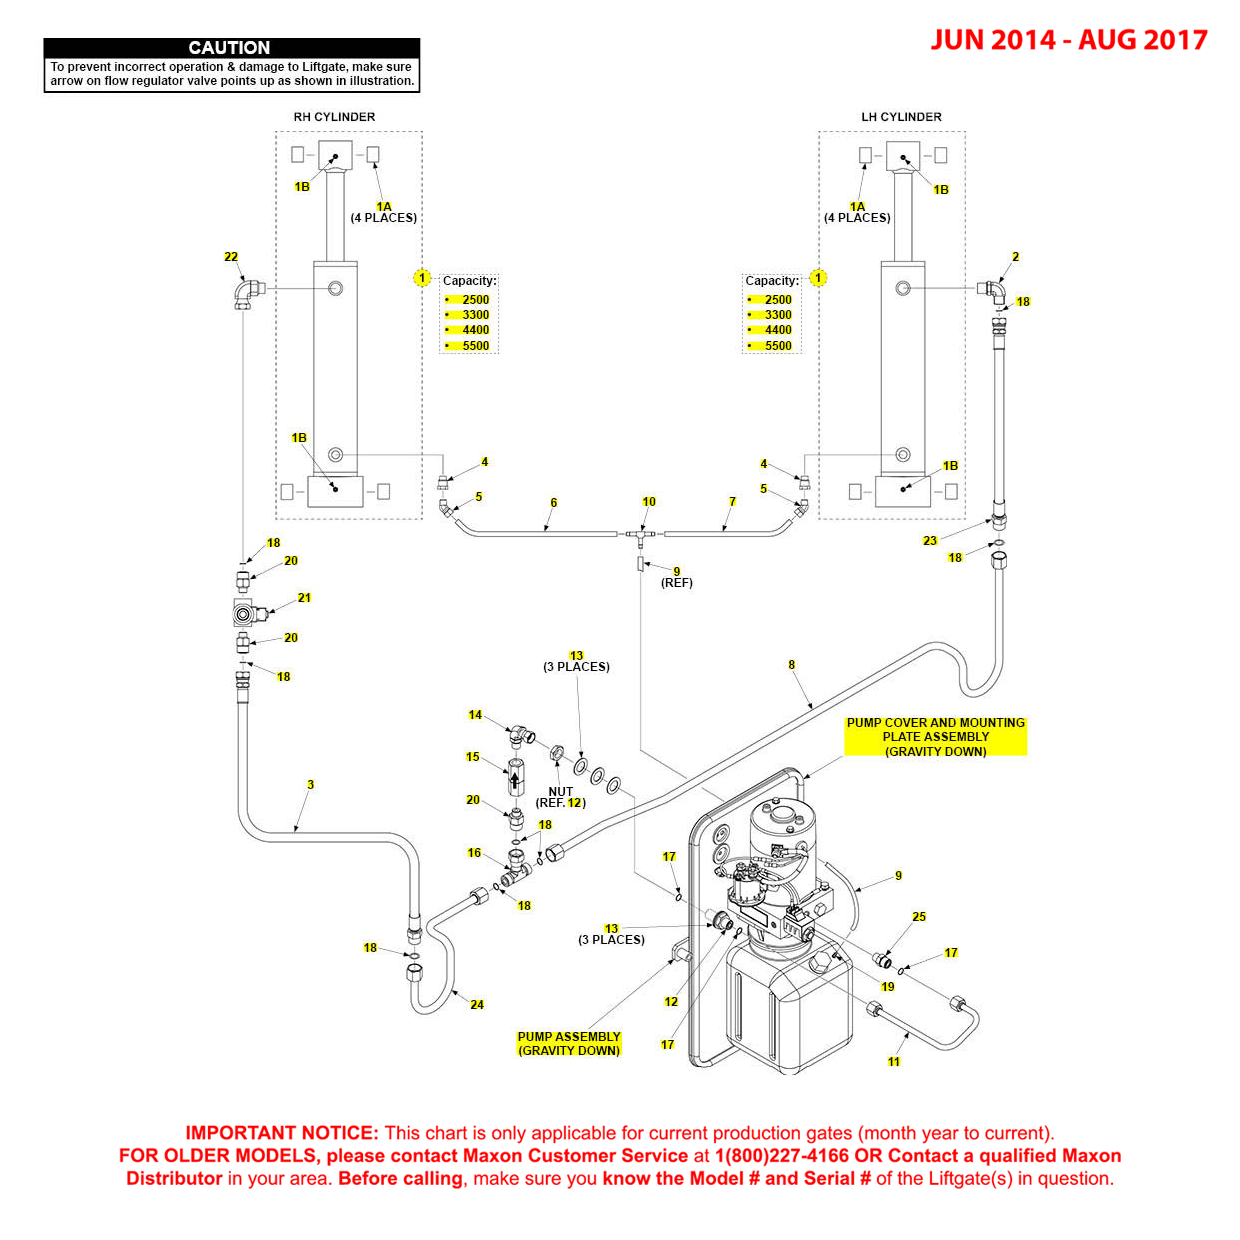 Maxon GPTLR (Jun 2014 - Aug 2017) Gravity Down Hydraulic Systems Diagram